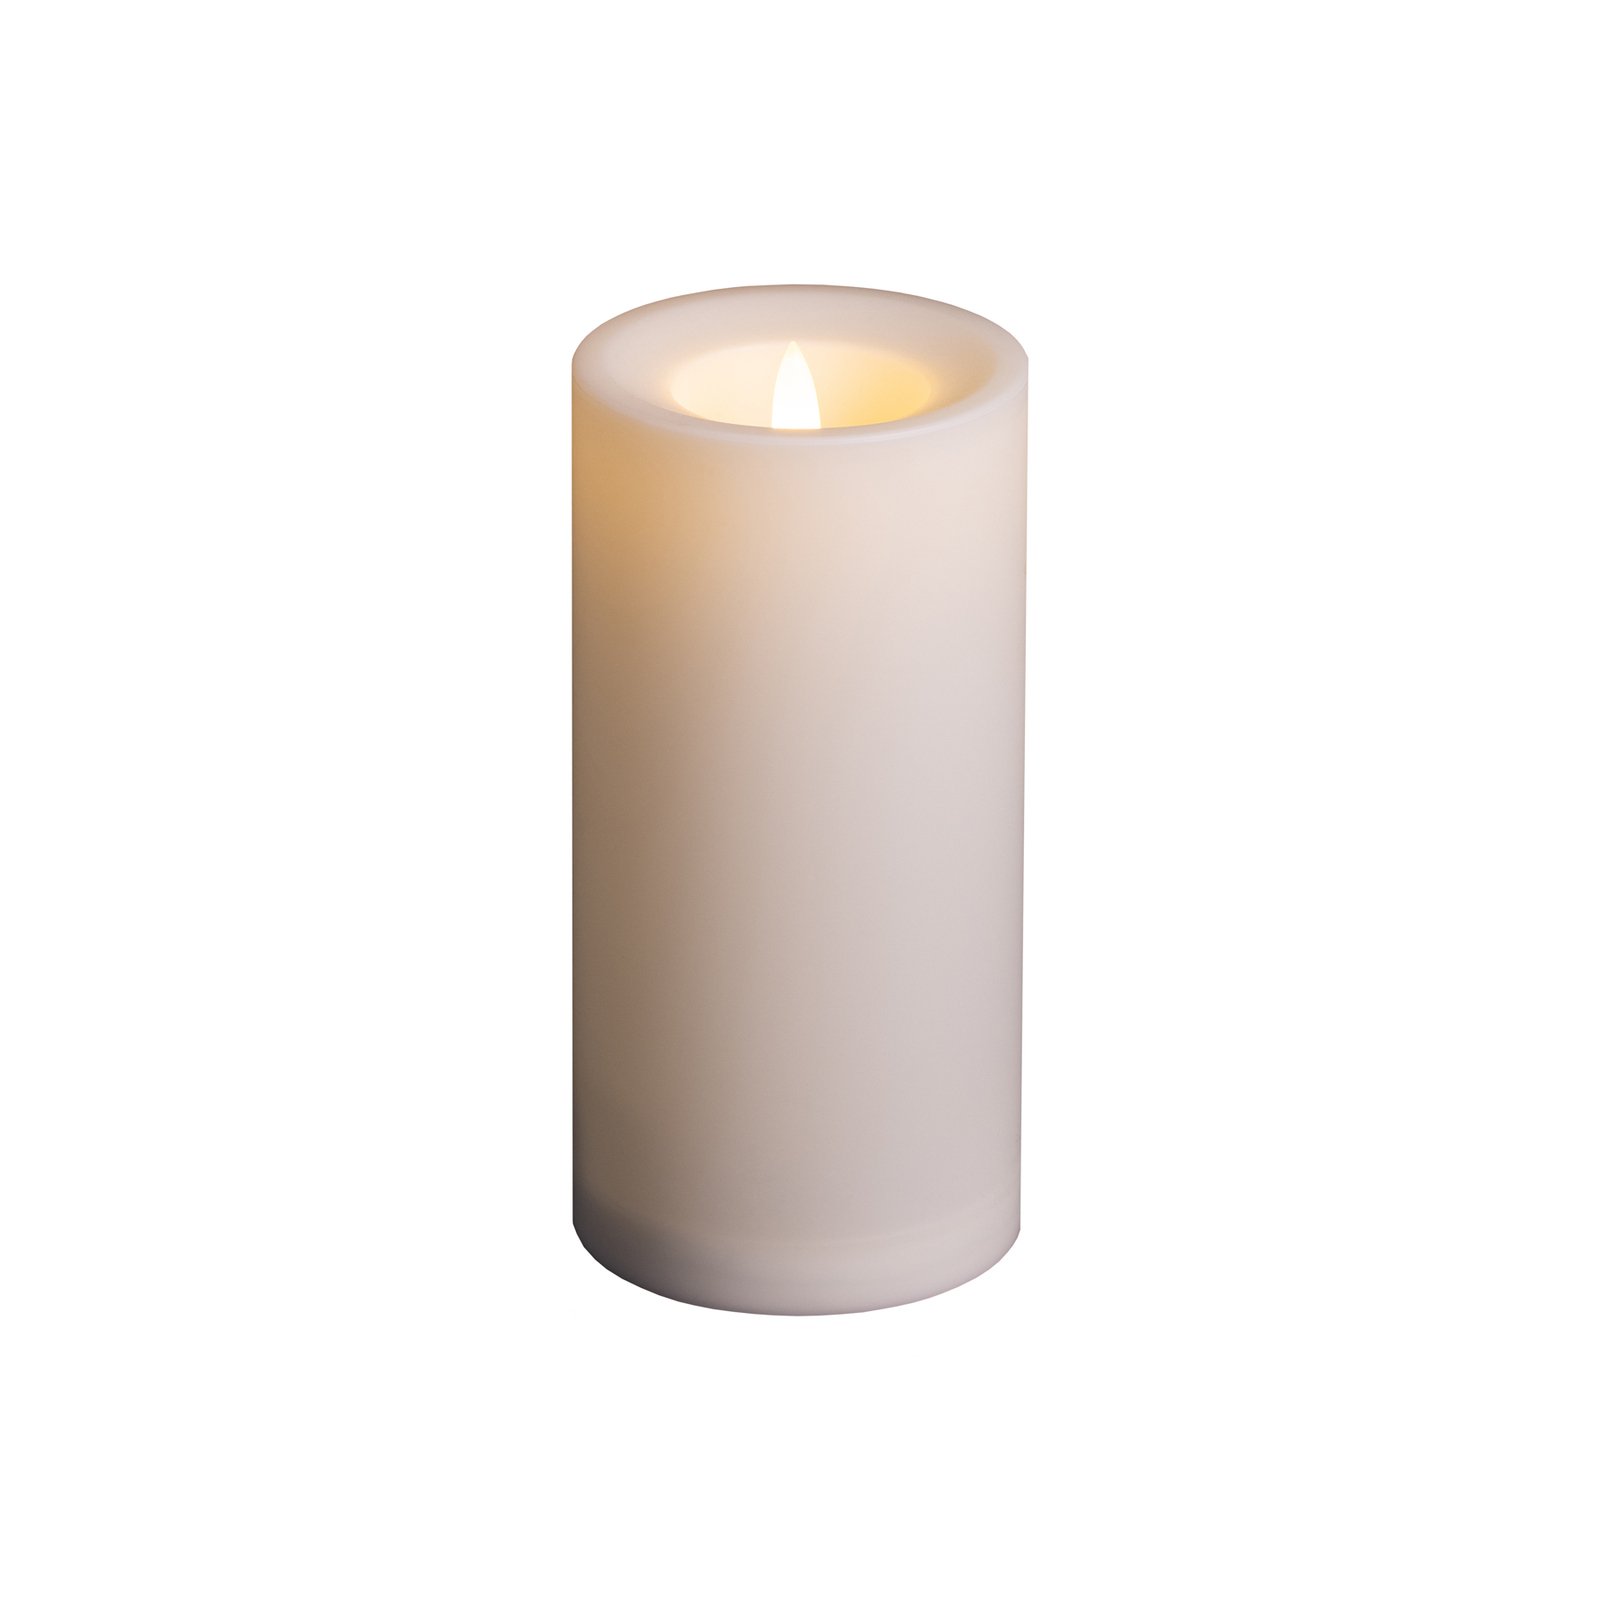 Sterntaler flicker light LED candle outdoors white